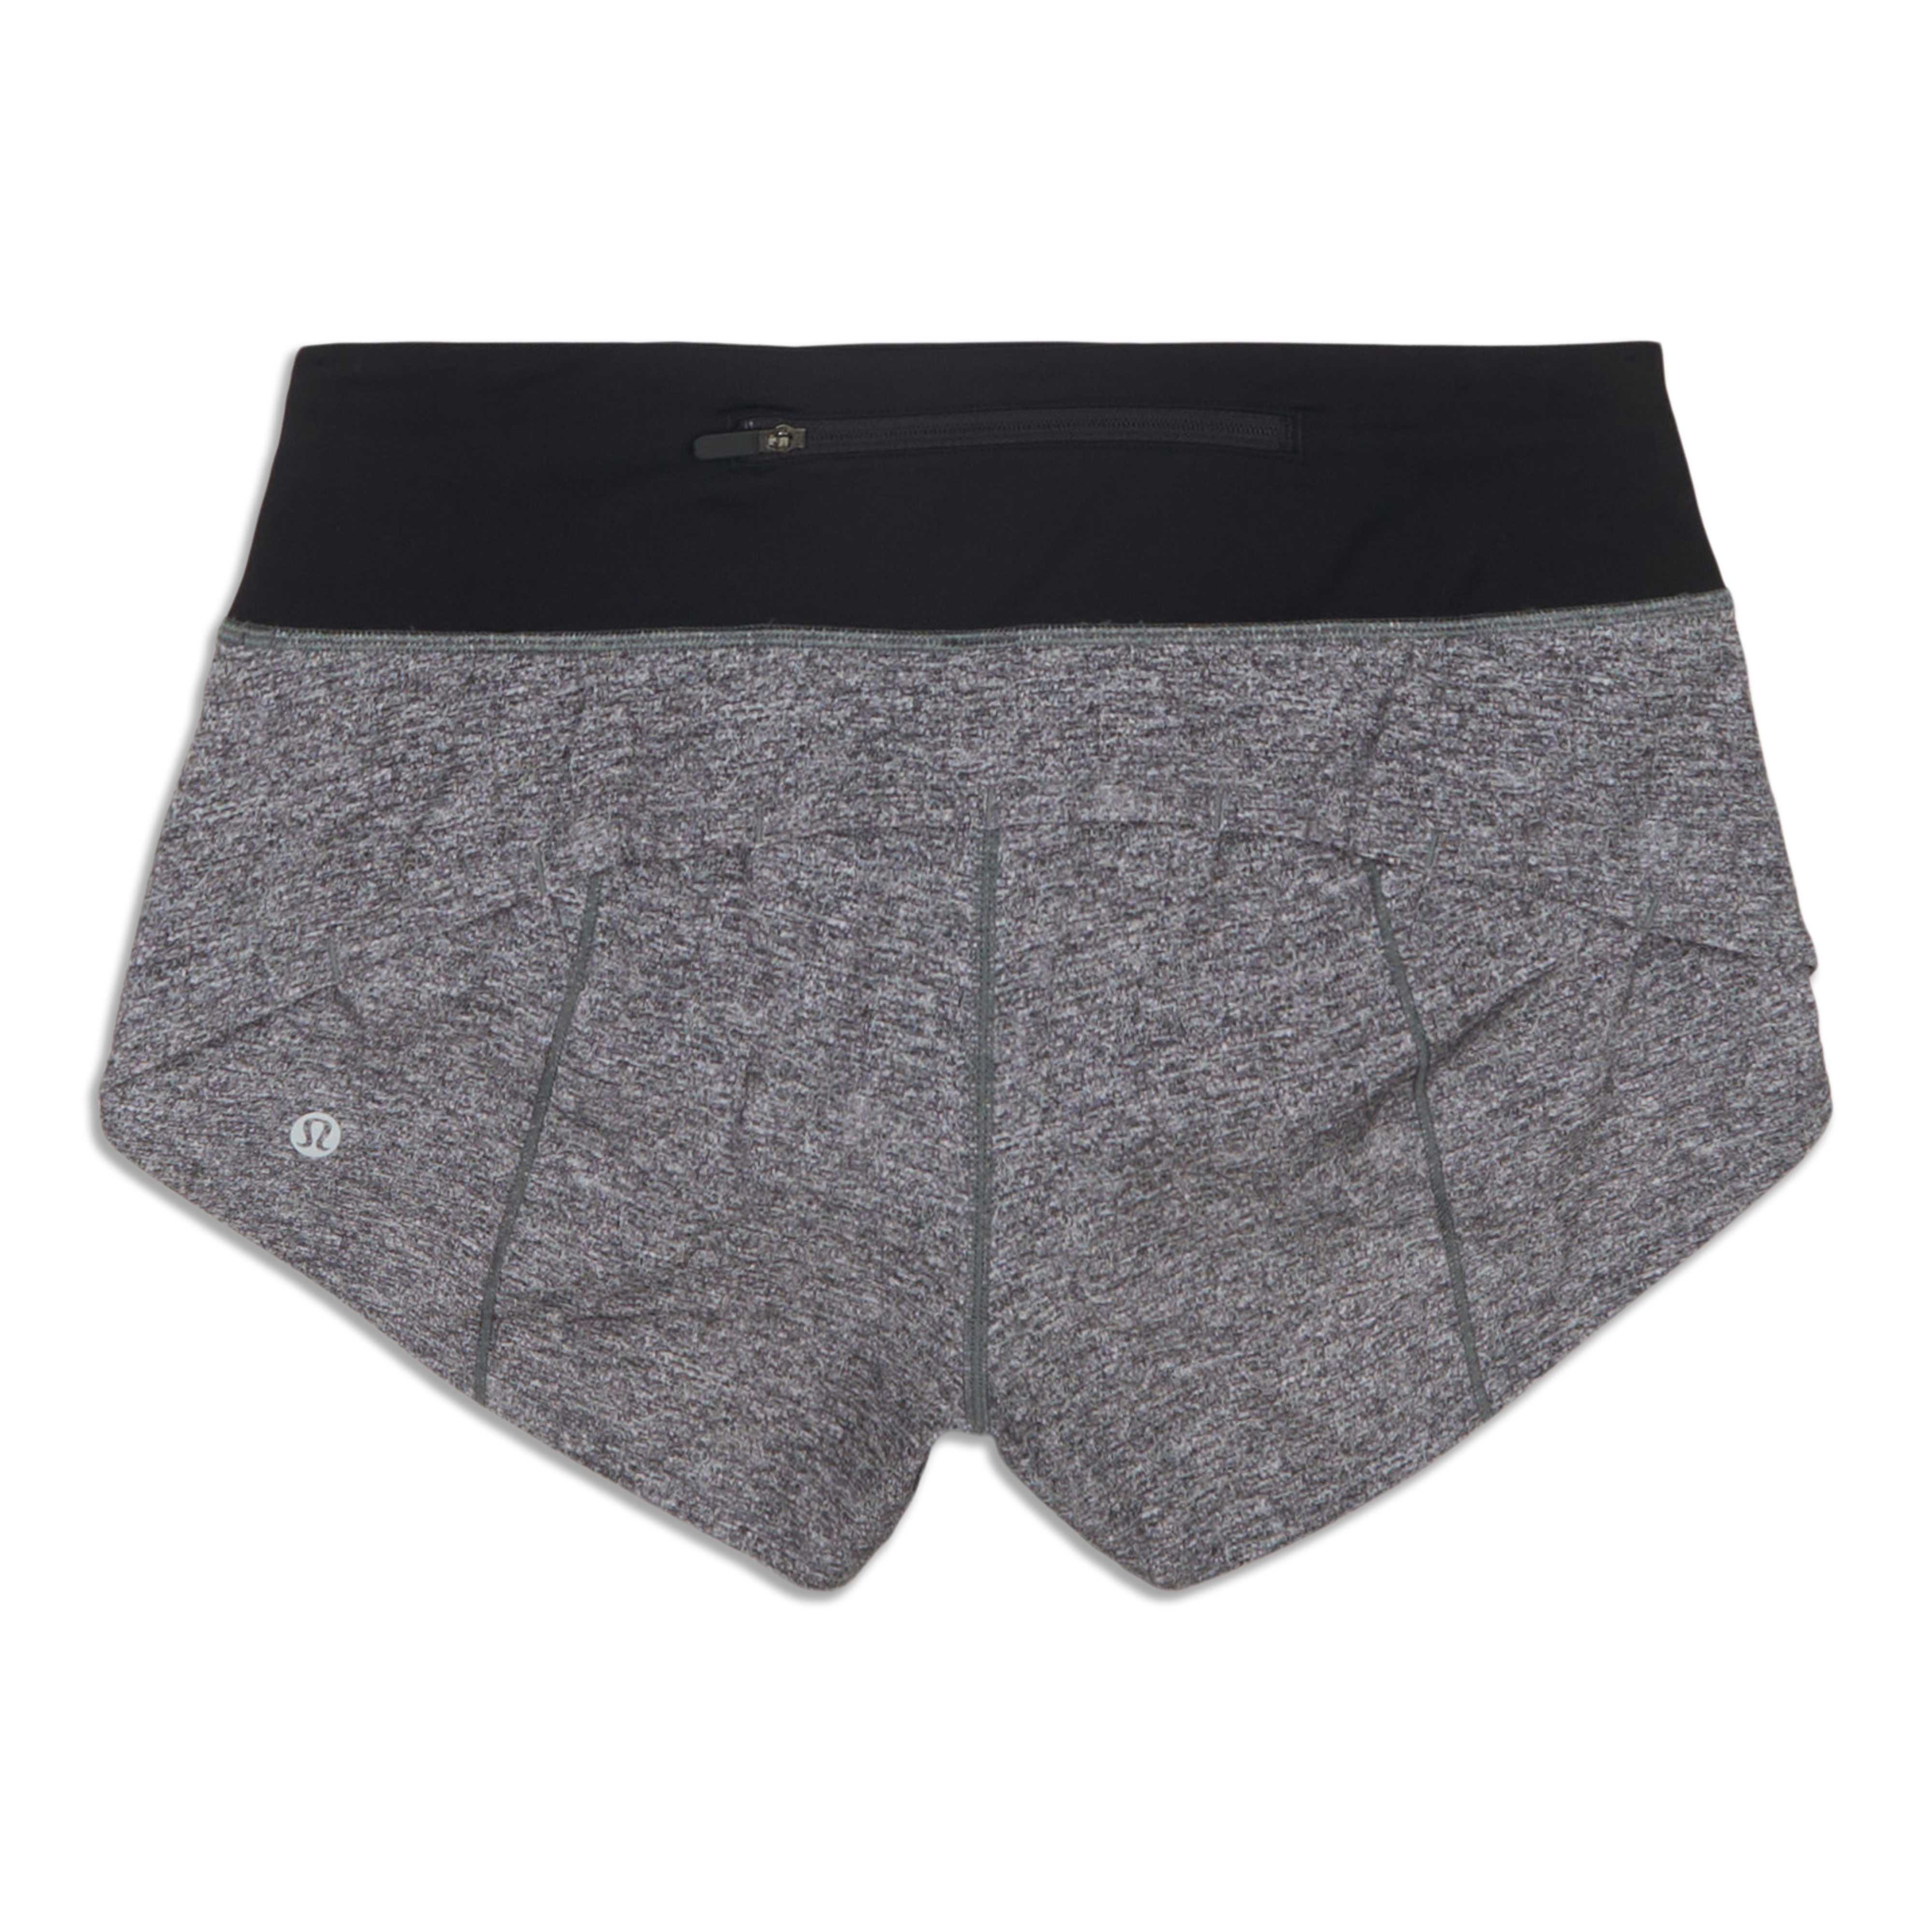 Lululemon Frozen Fizz Shorts RARE Gray Size 4 - $85 - From riley